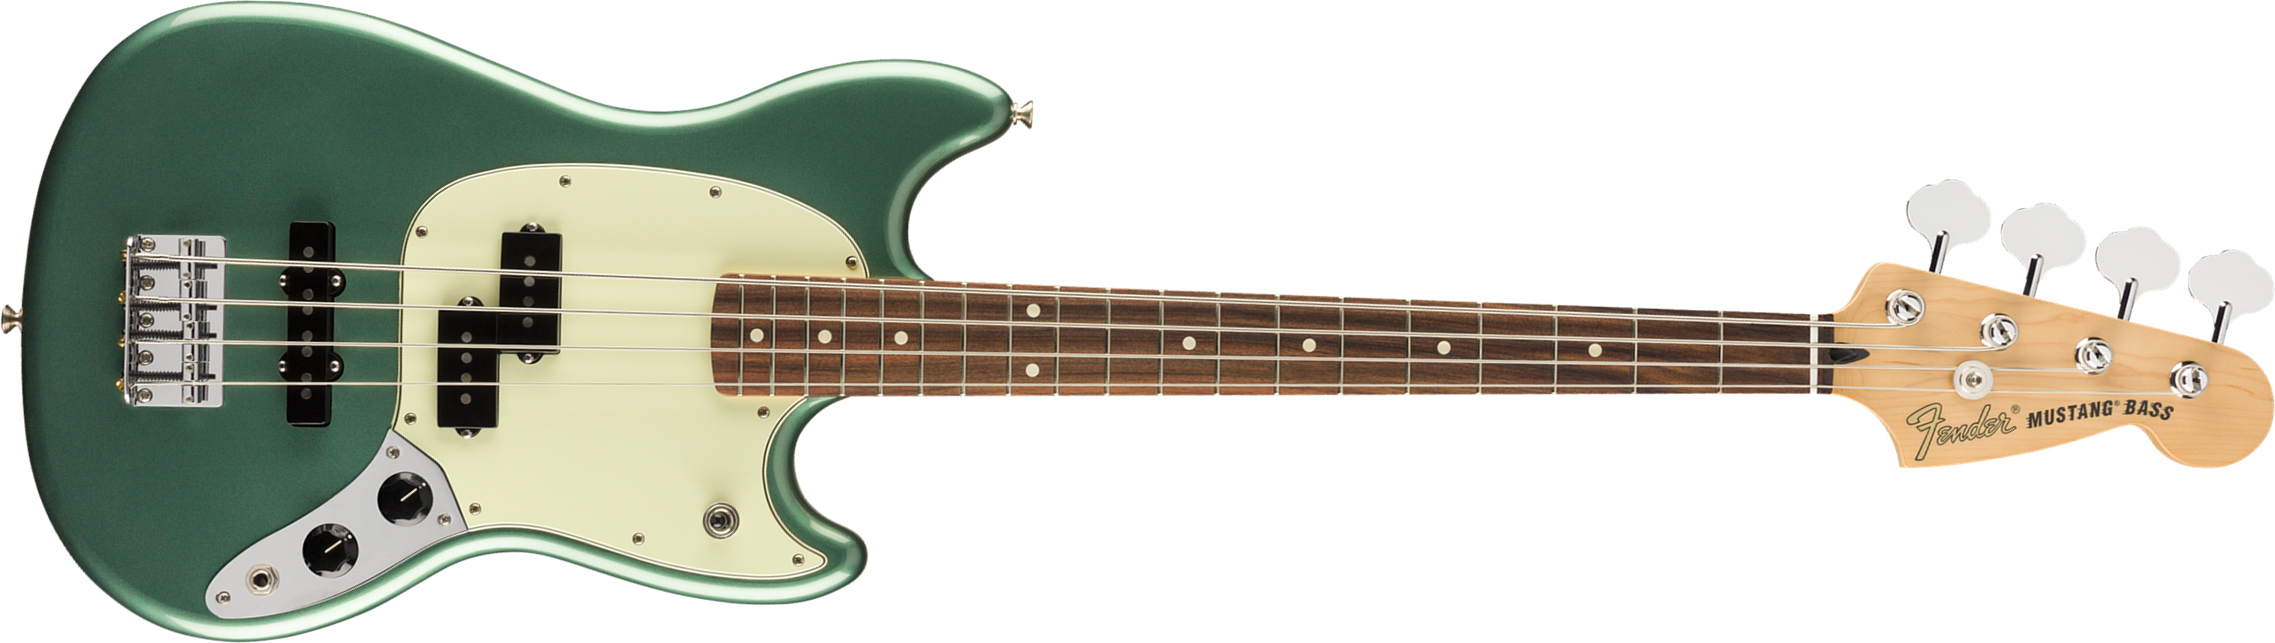 Fender Mustang Bass Pj Player Ltd Mex Pf - Sherwood Green Metallic - Electric bass for kids - Main picture